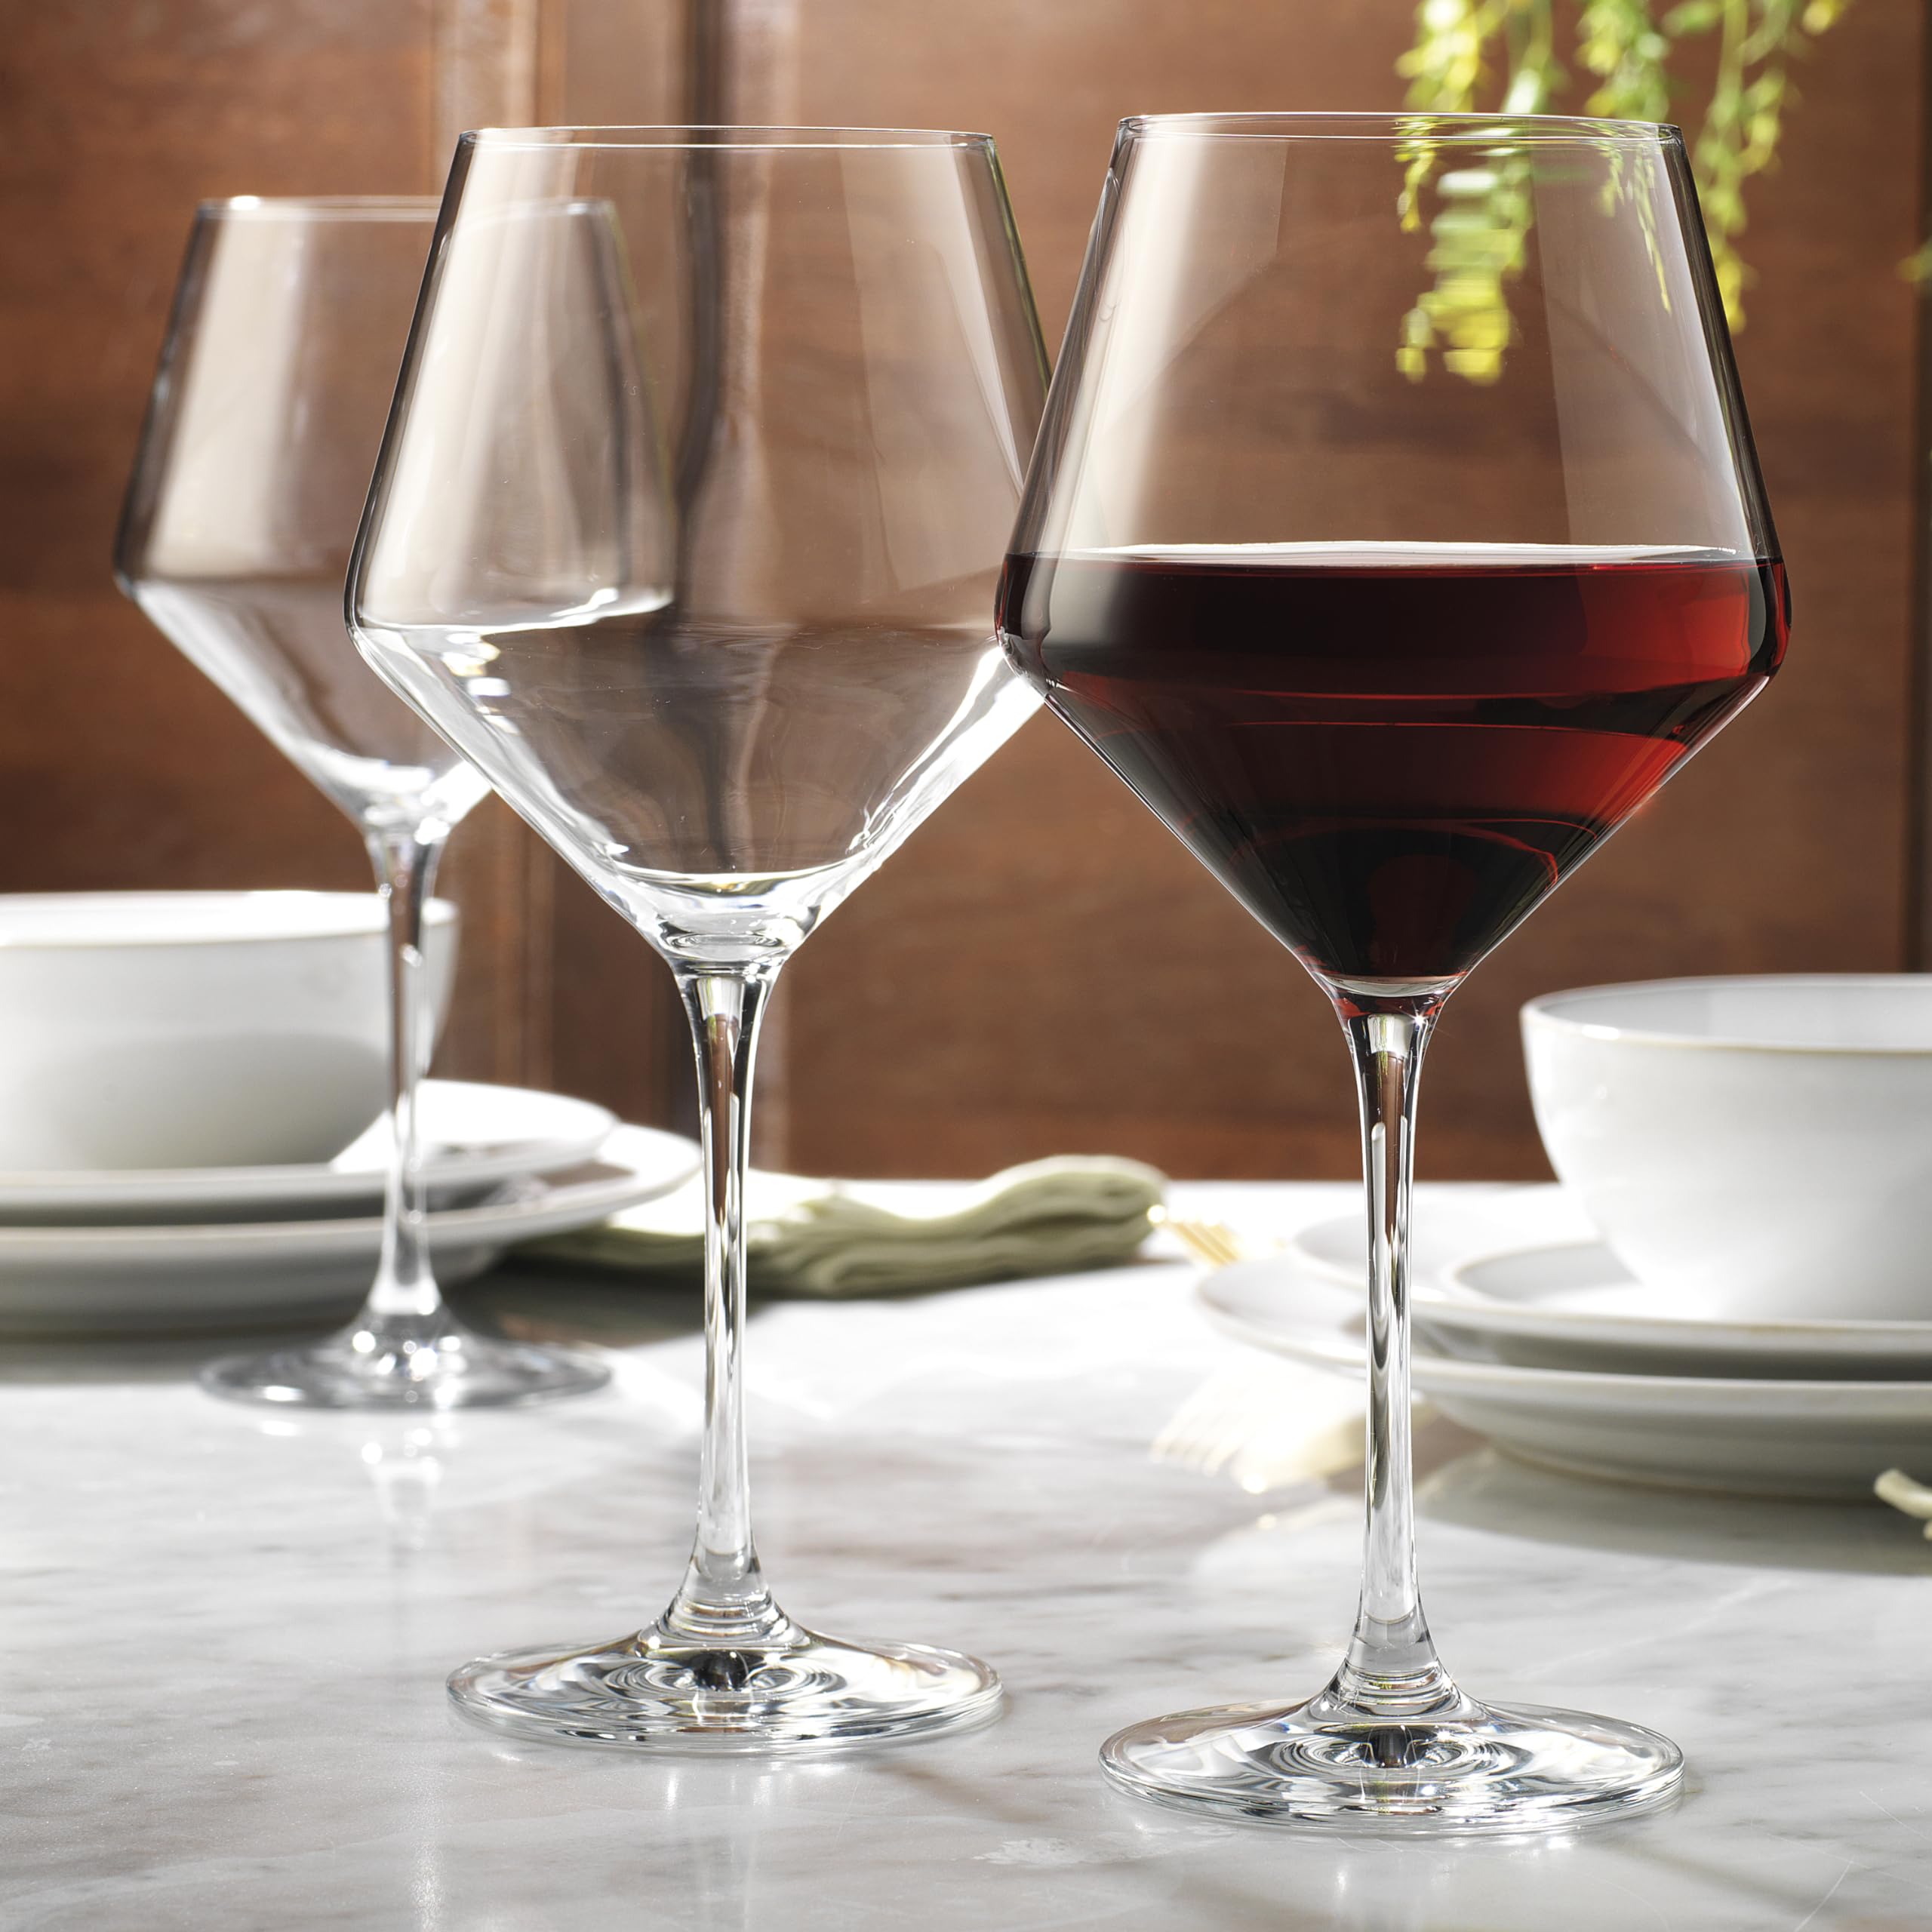 Glaver's Red Wine Glasses Set Of 4, 23 Oz Large Crystal White Wine Glass, Elegant Thin Rim, Modern Long Stemmed Wine Glasses, Pretty Gifting Wine Glasses. Home Bar Uses.  - Like New